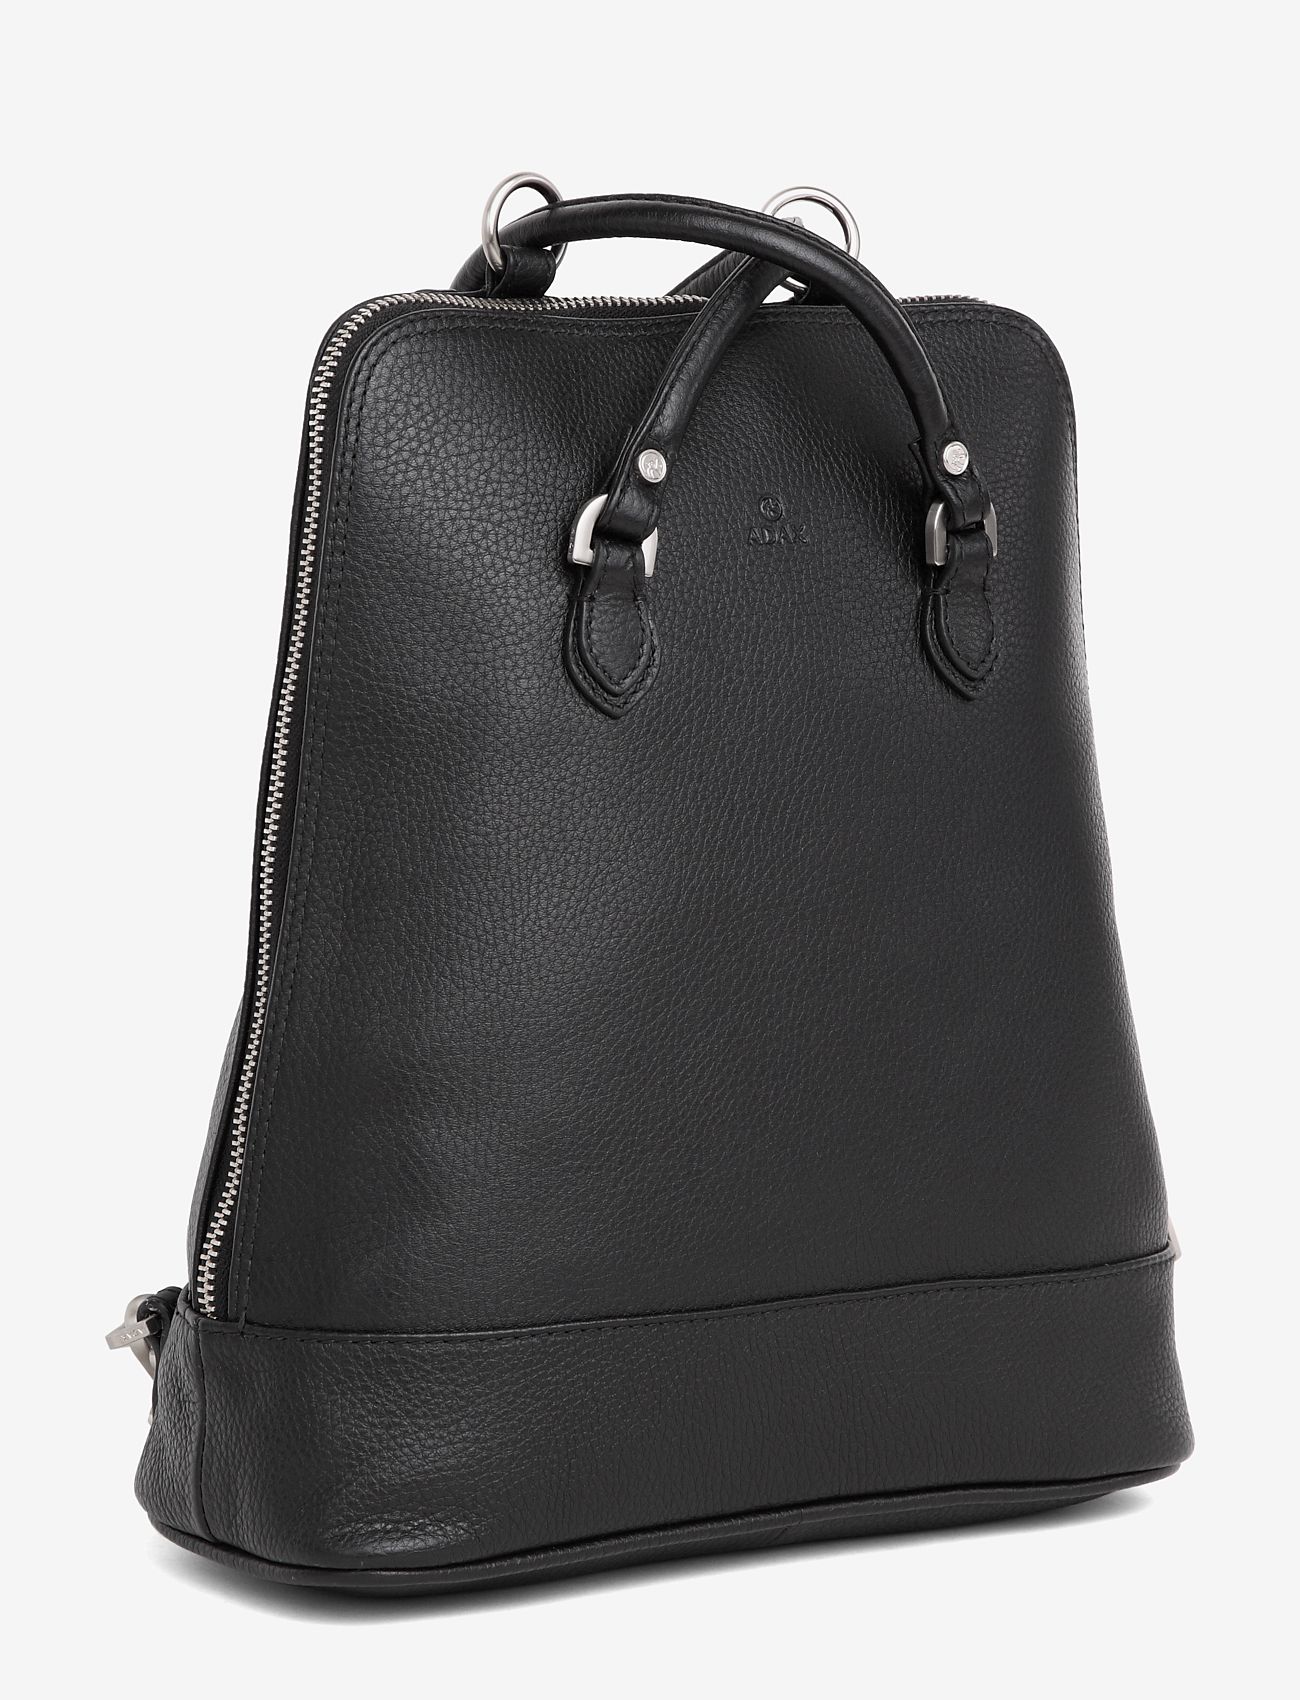 Adax - Cormorano backpack Lina - accessories - black - 1